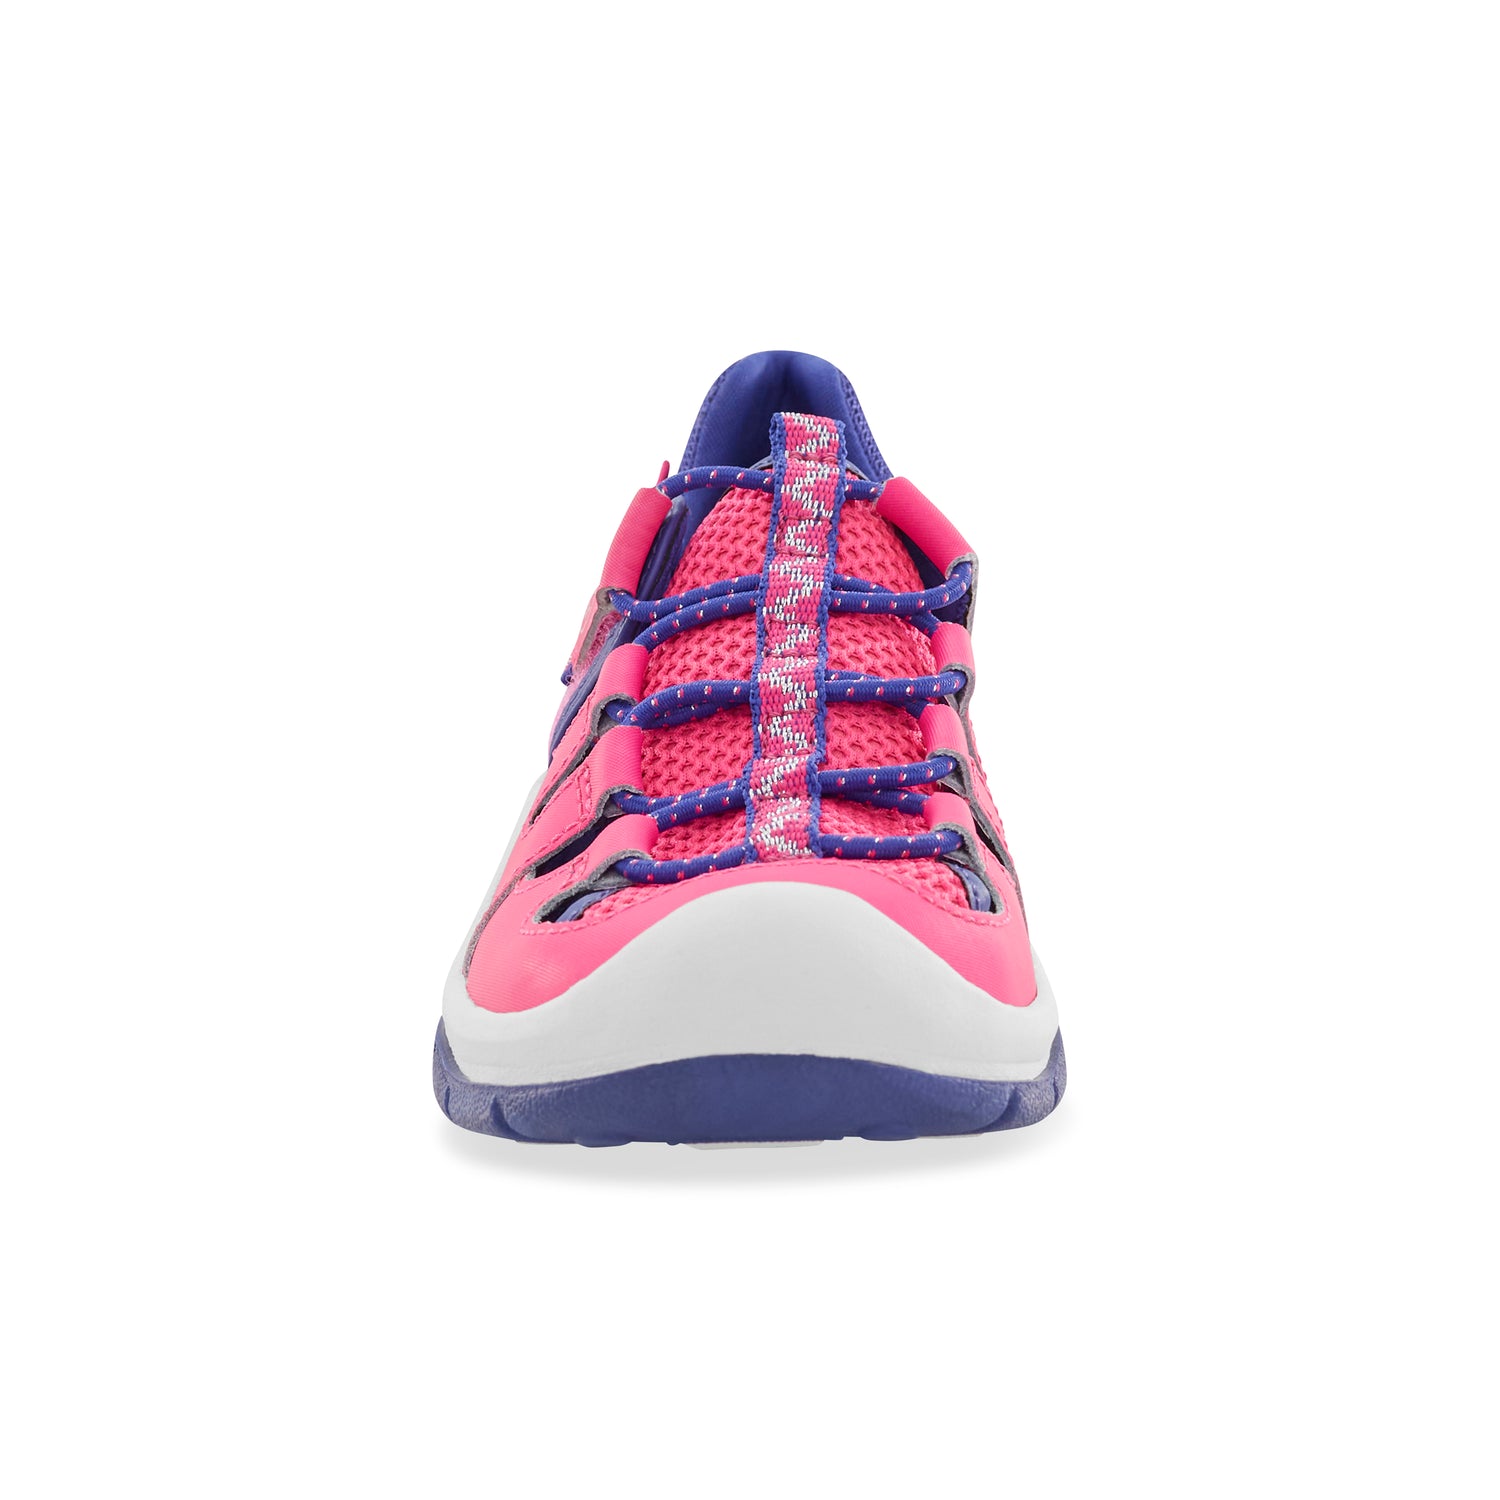 Wade 2.0 Sneaker Sandal Hot Pink